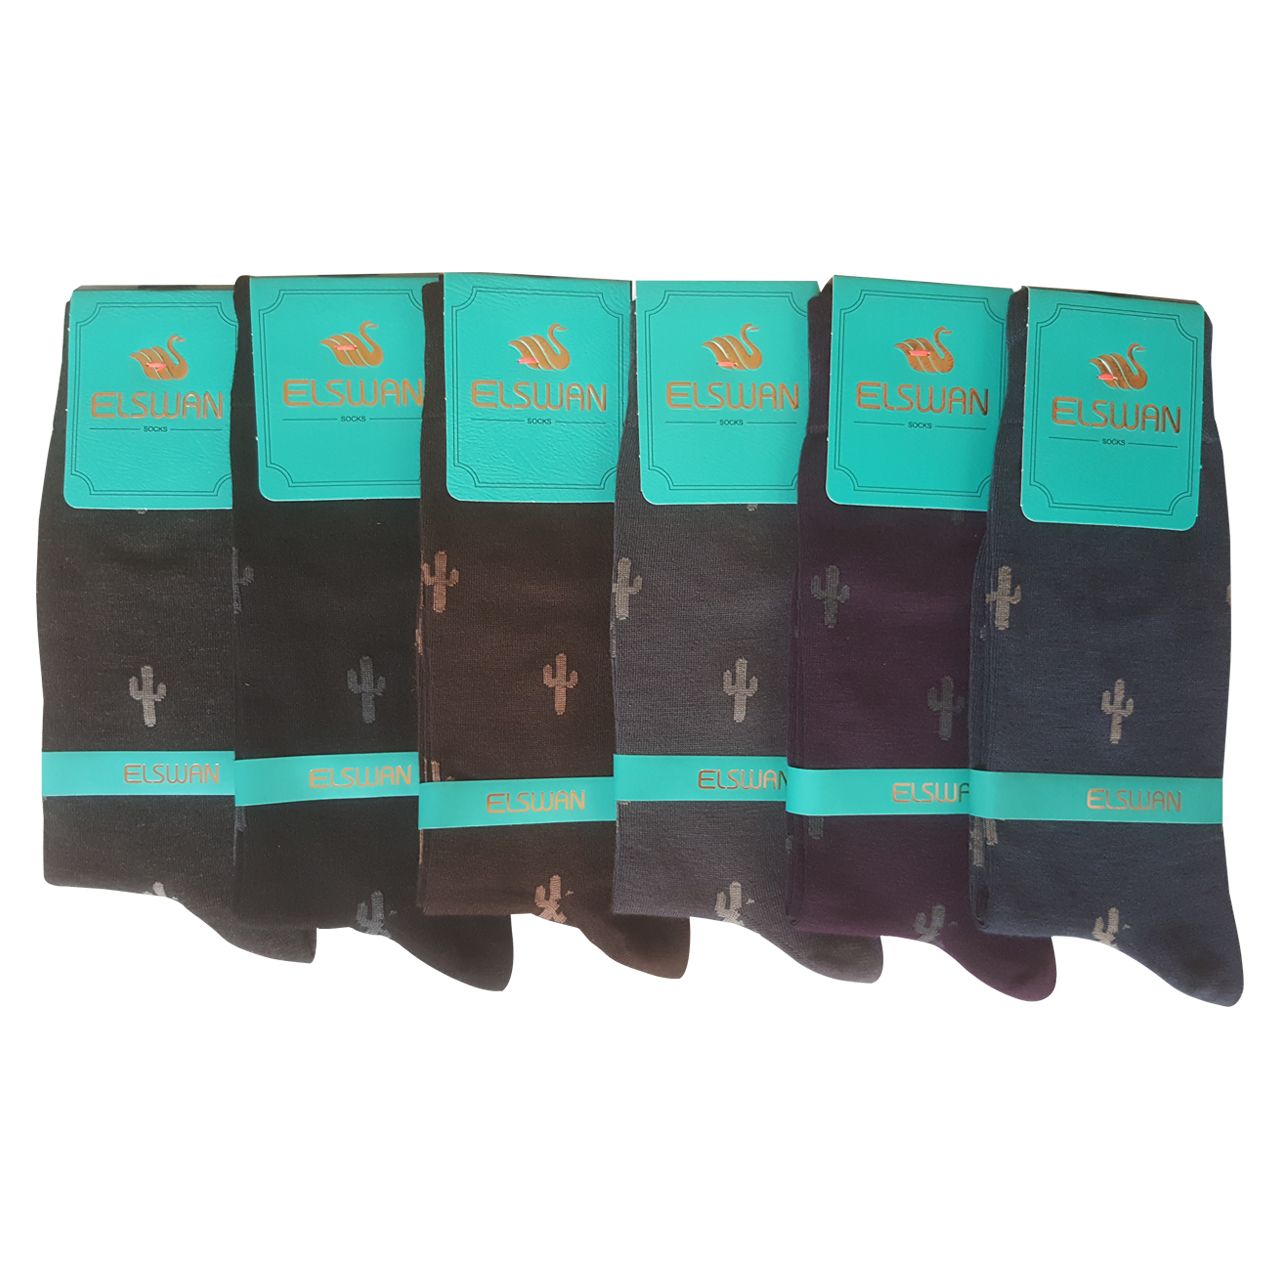 جوراب مردانه ال سون طرح کاکتوس کد PH251 مجموعه 6 عددی -  - 1